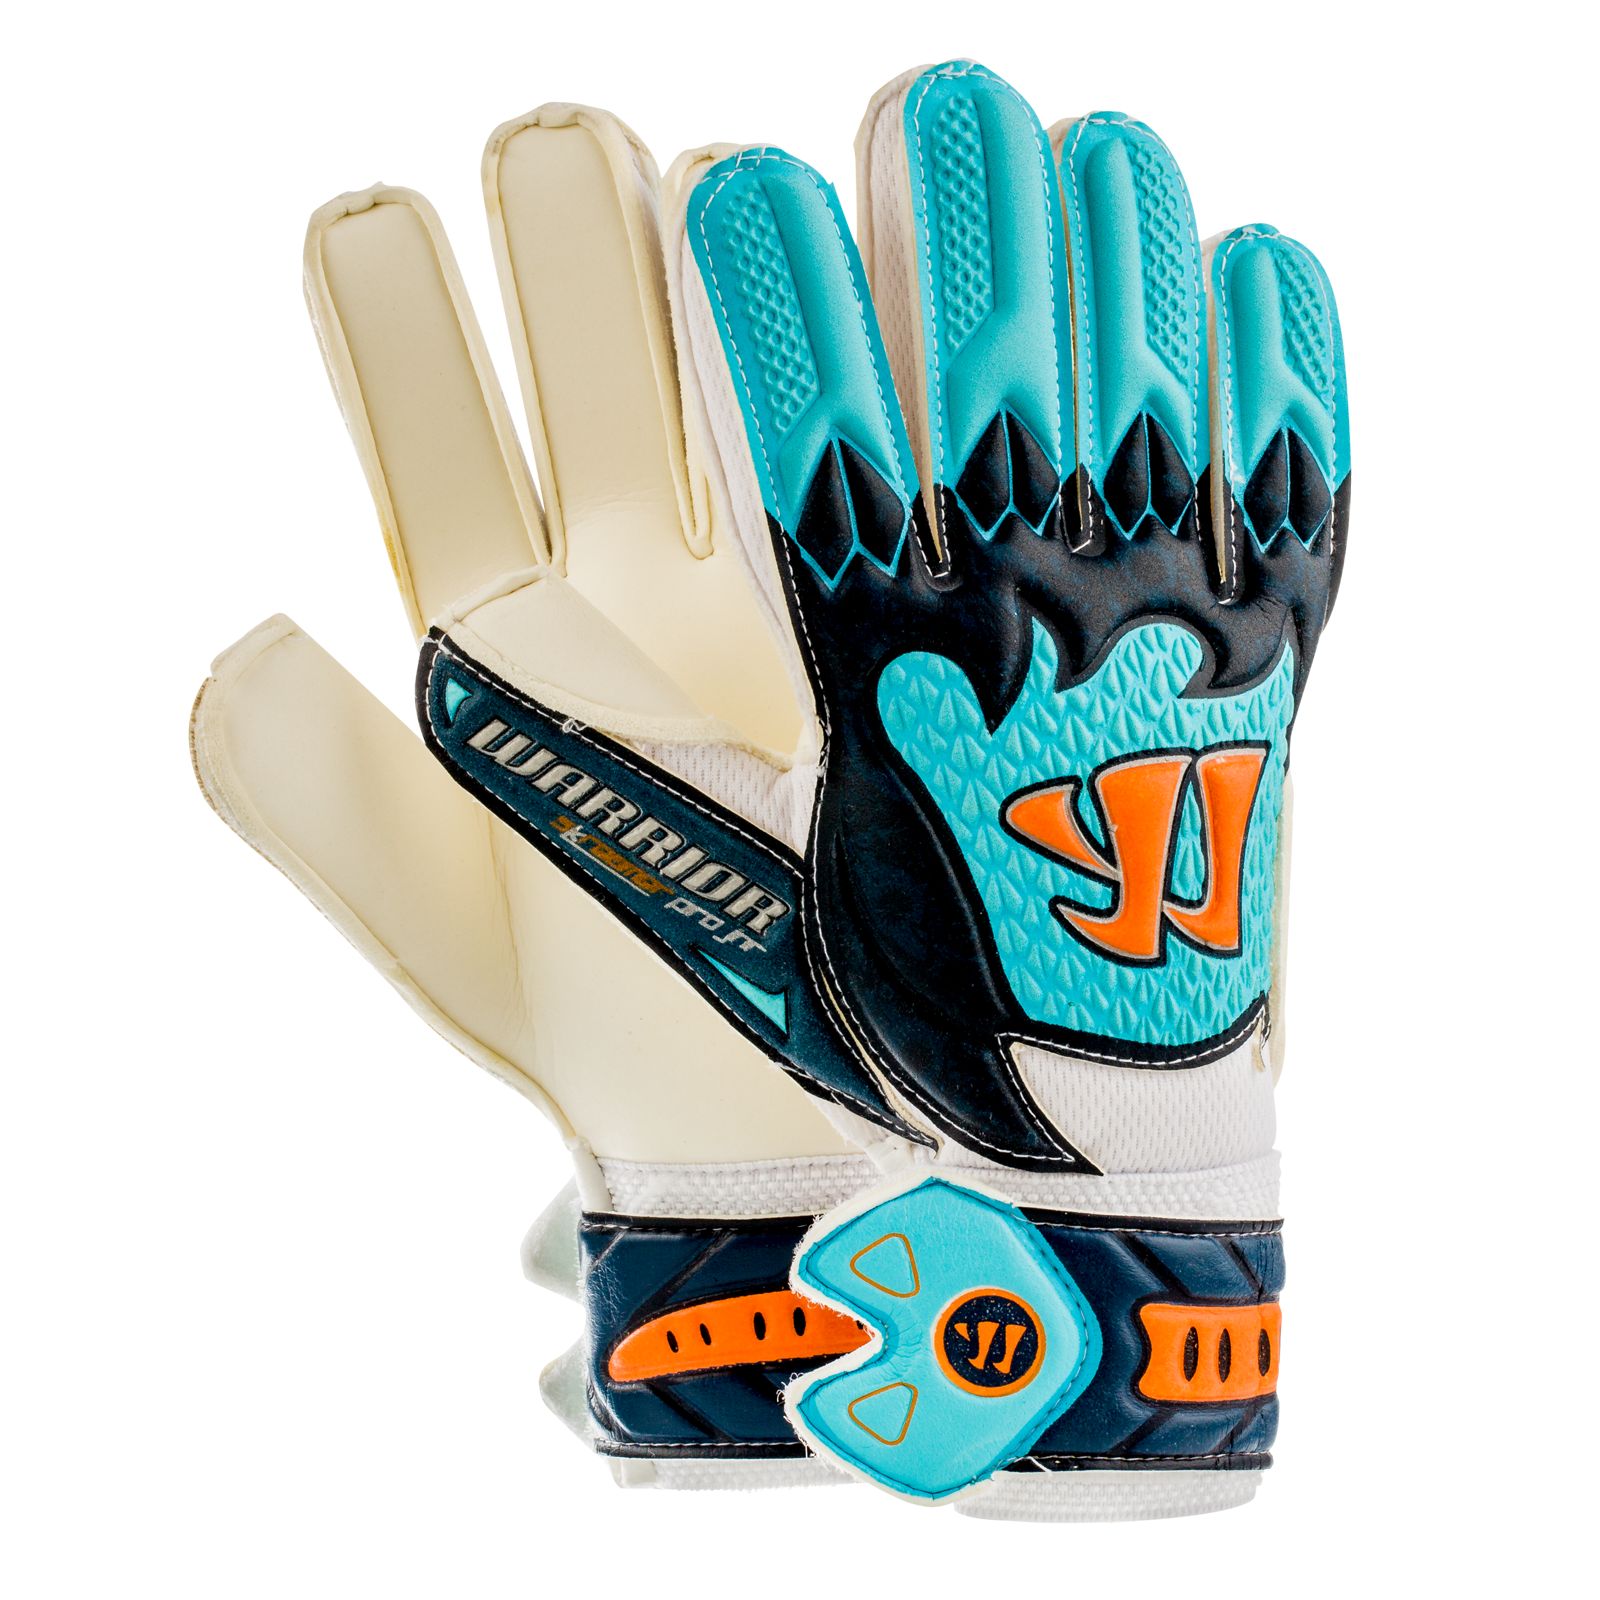 Skreamer Pro Junior Goalkeeper Gloves, White with Blue Radiance & Insignia Blue image number 0